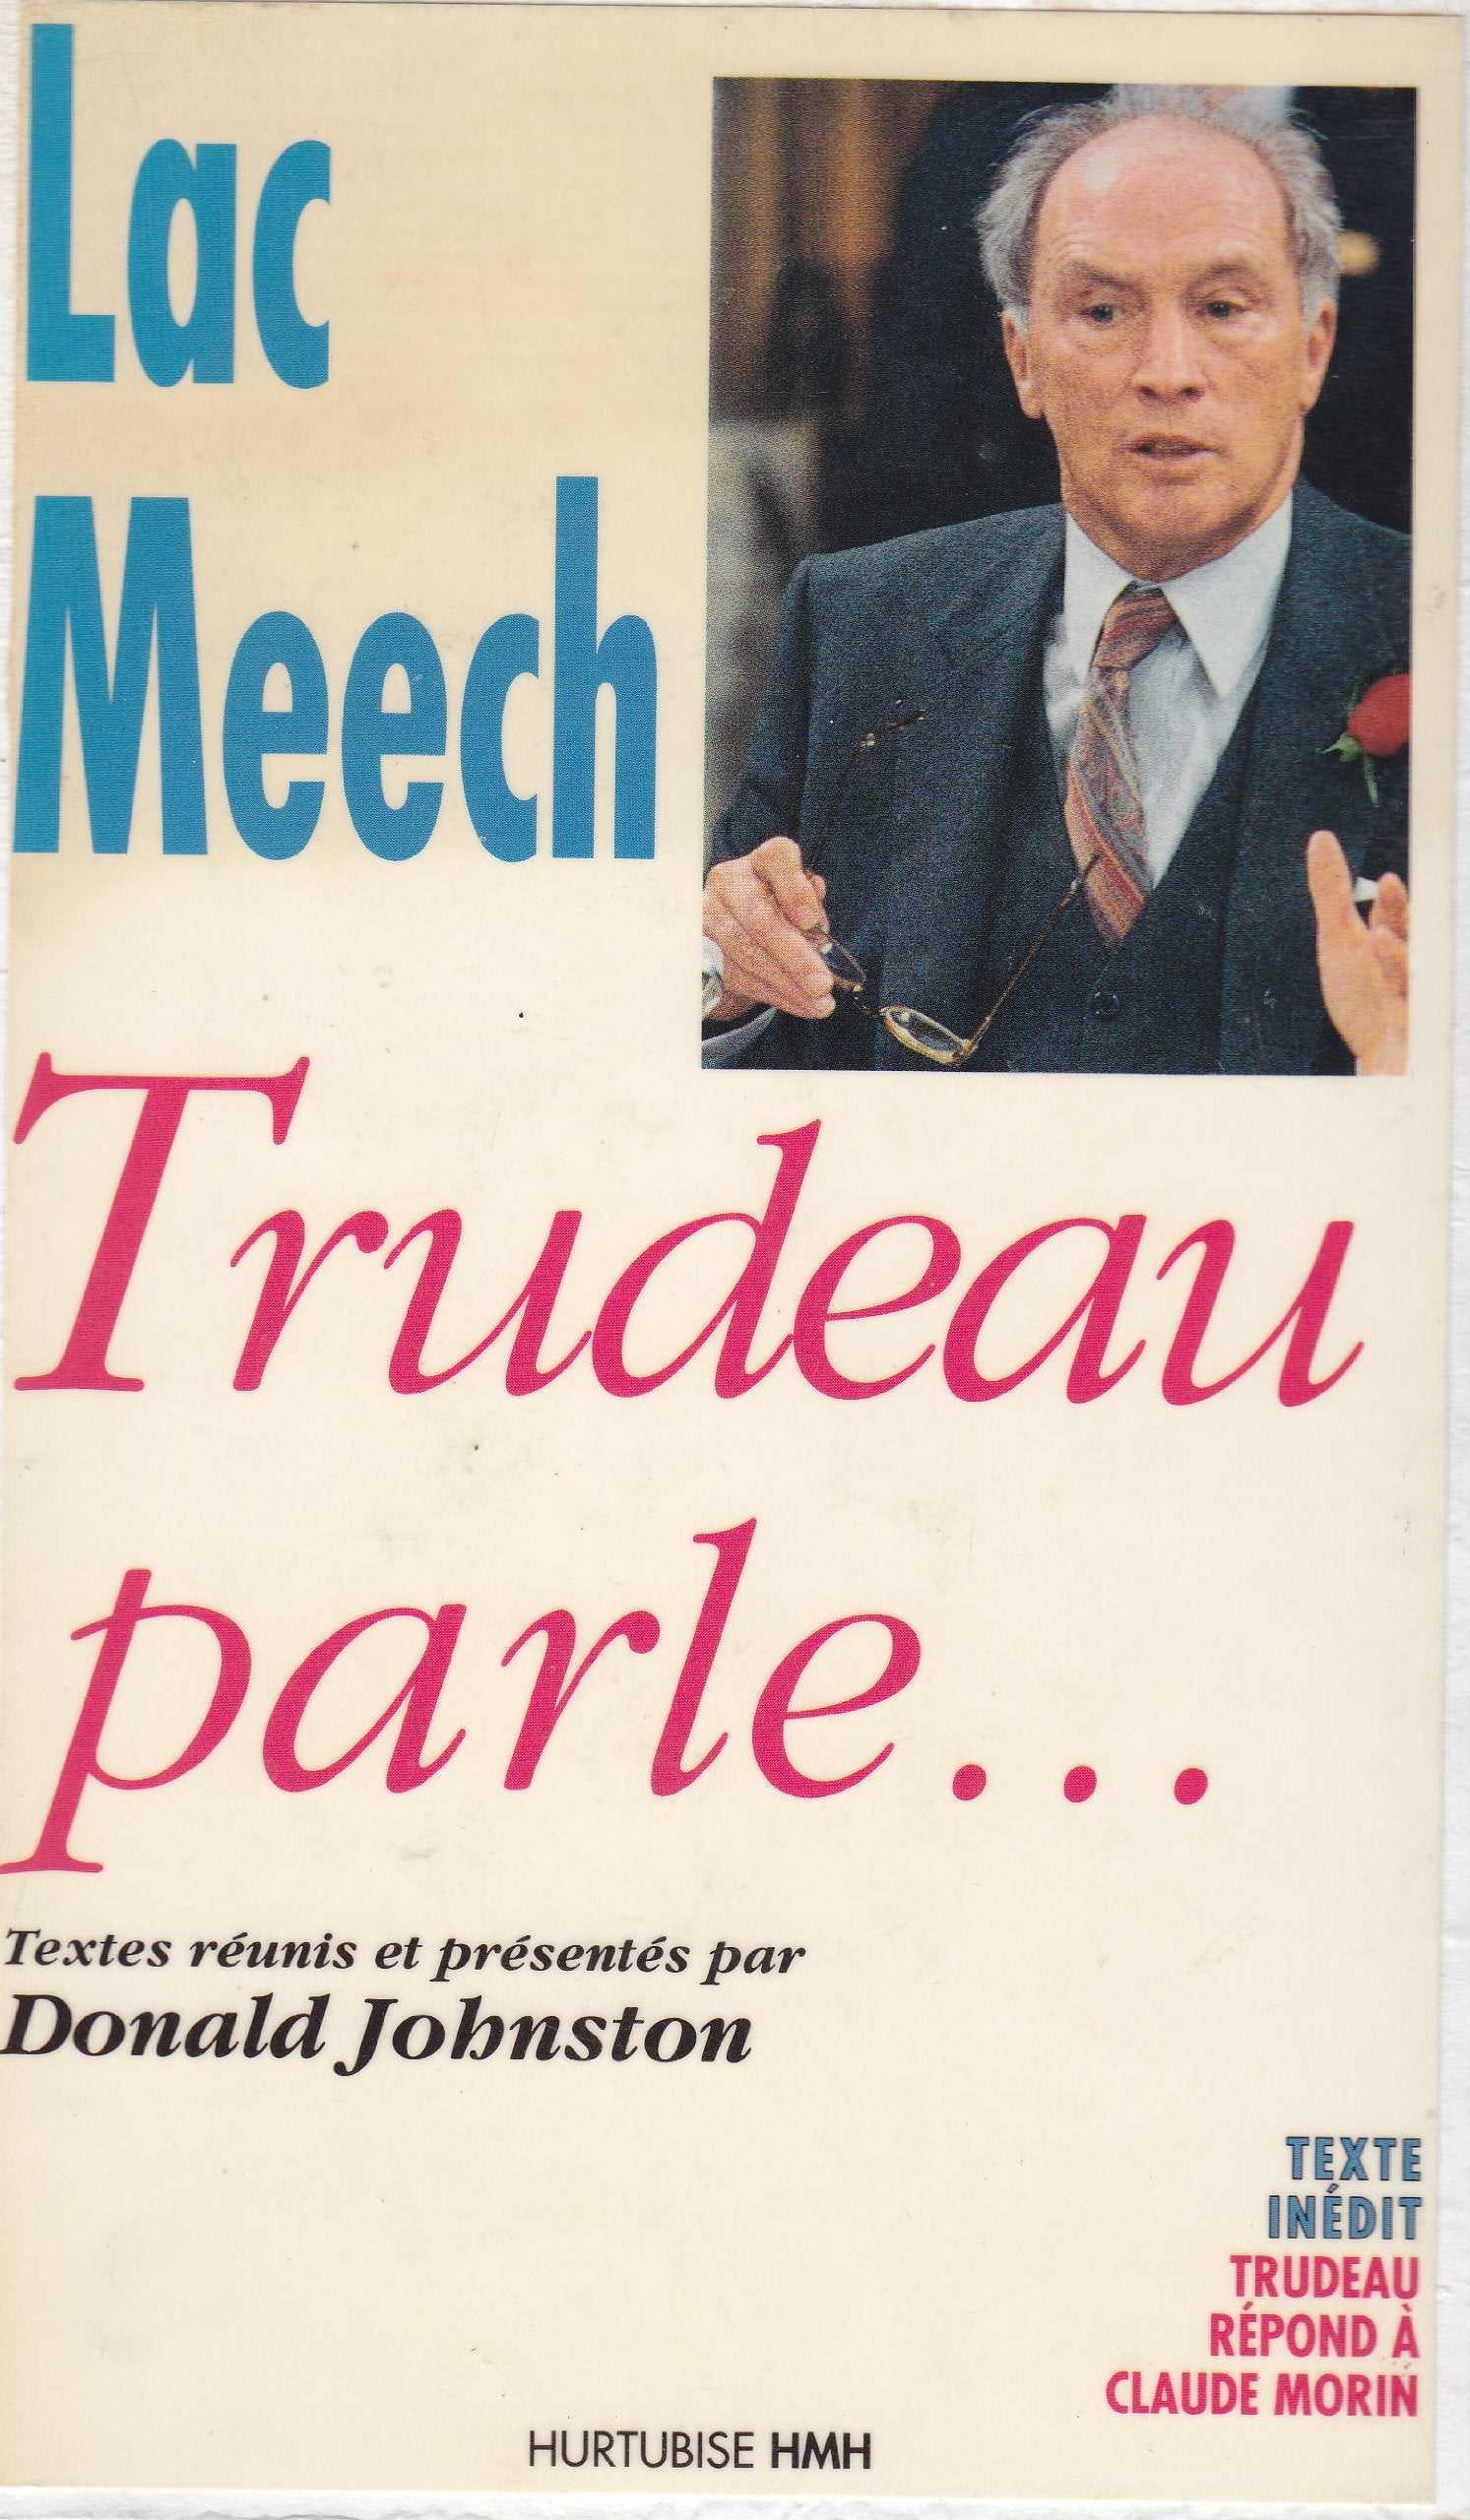 Livre ISBN 2890458660 Lac Meech: Trudeau parle... (Donal Johnson)